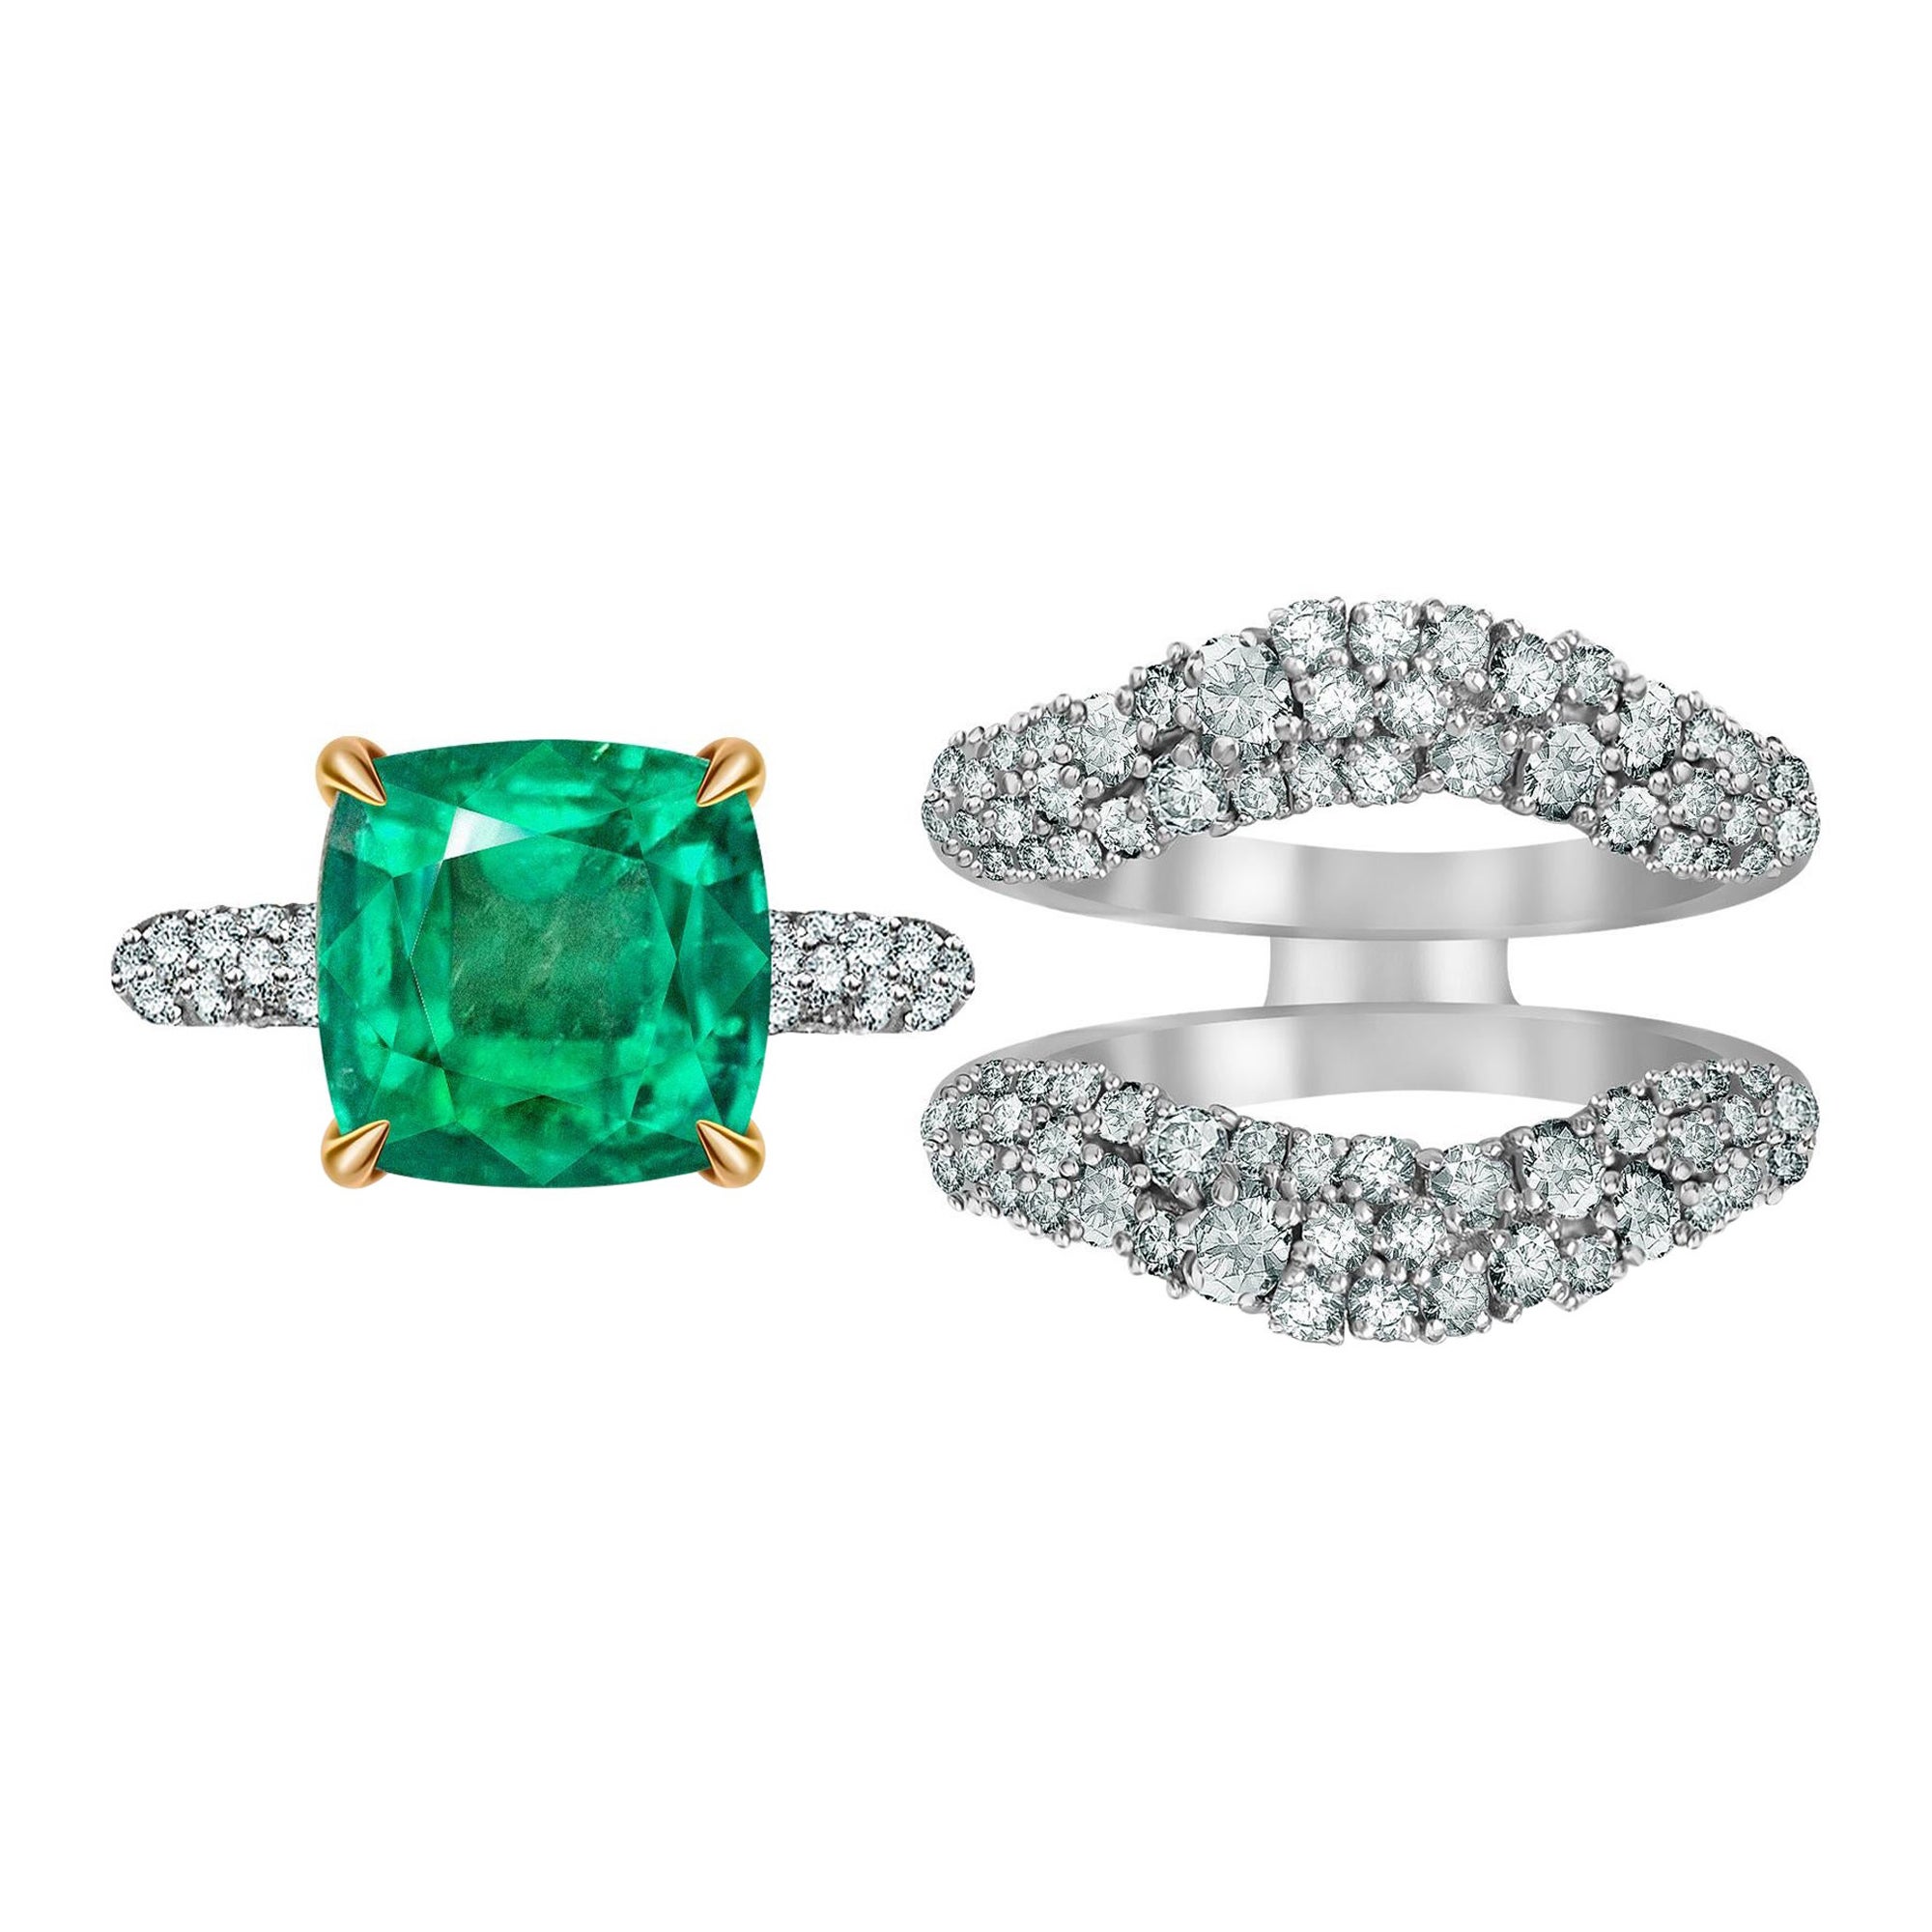 5.93 Carat Emerald Diamonds 18 Karat White Gold Dual Rings "Embrace" by D&A For Sale